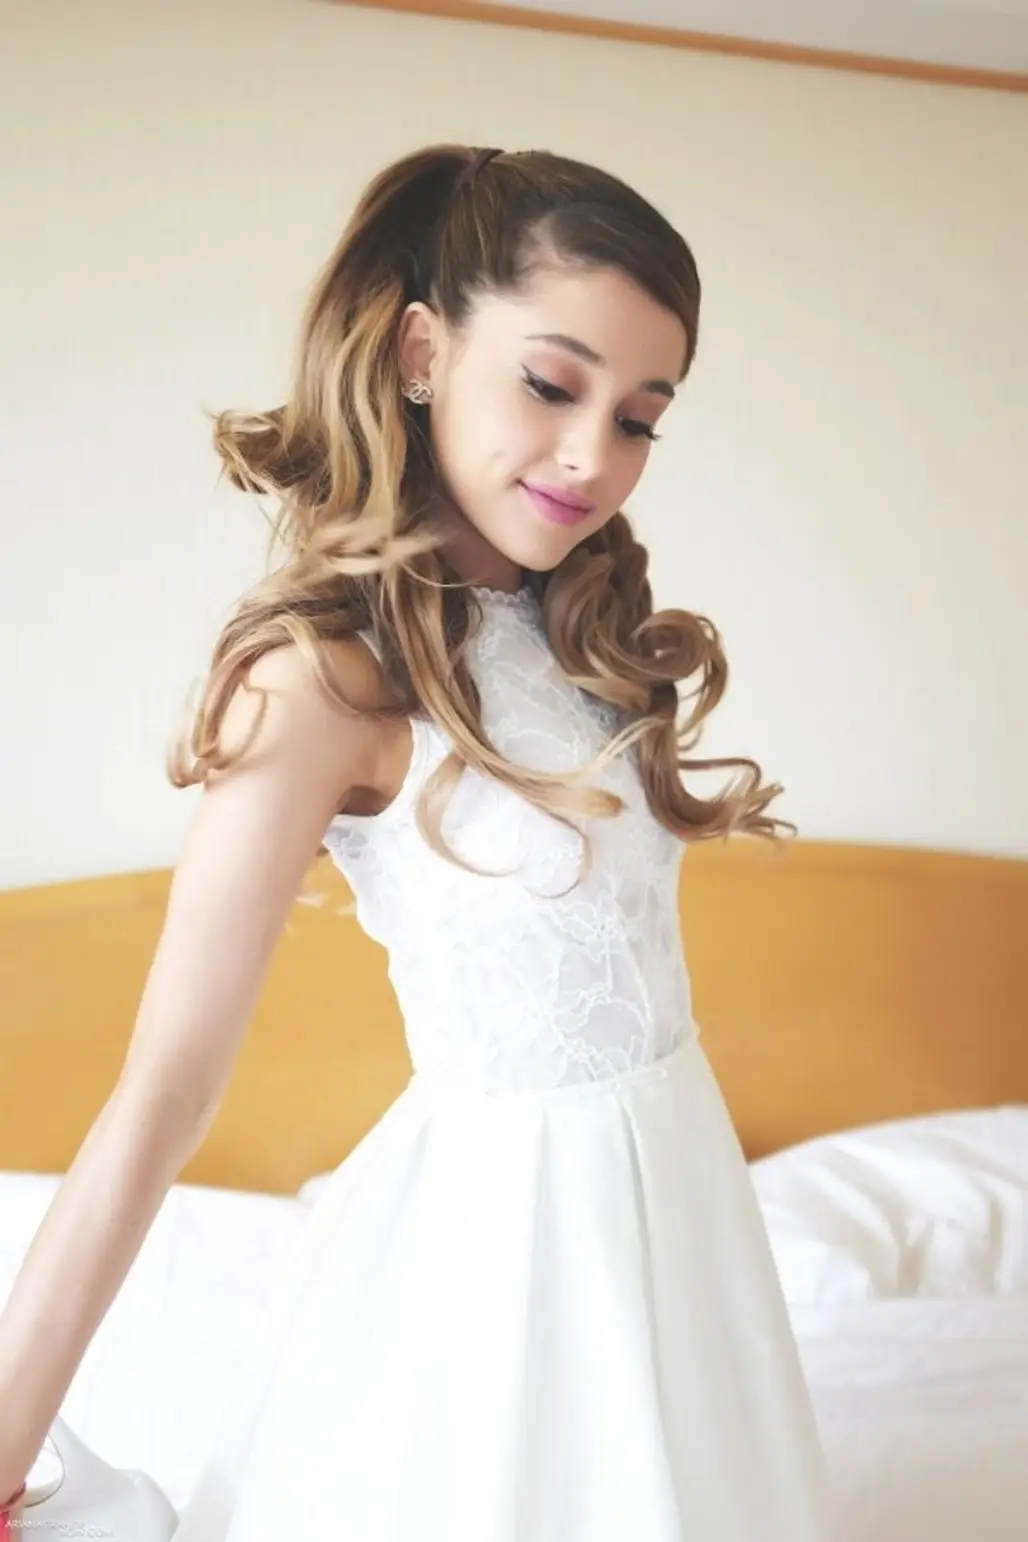 Ariana Grande - August 29, 2014